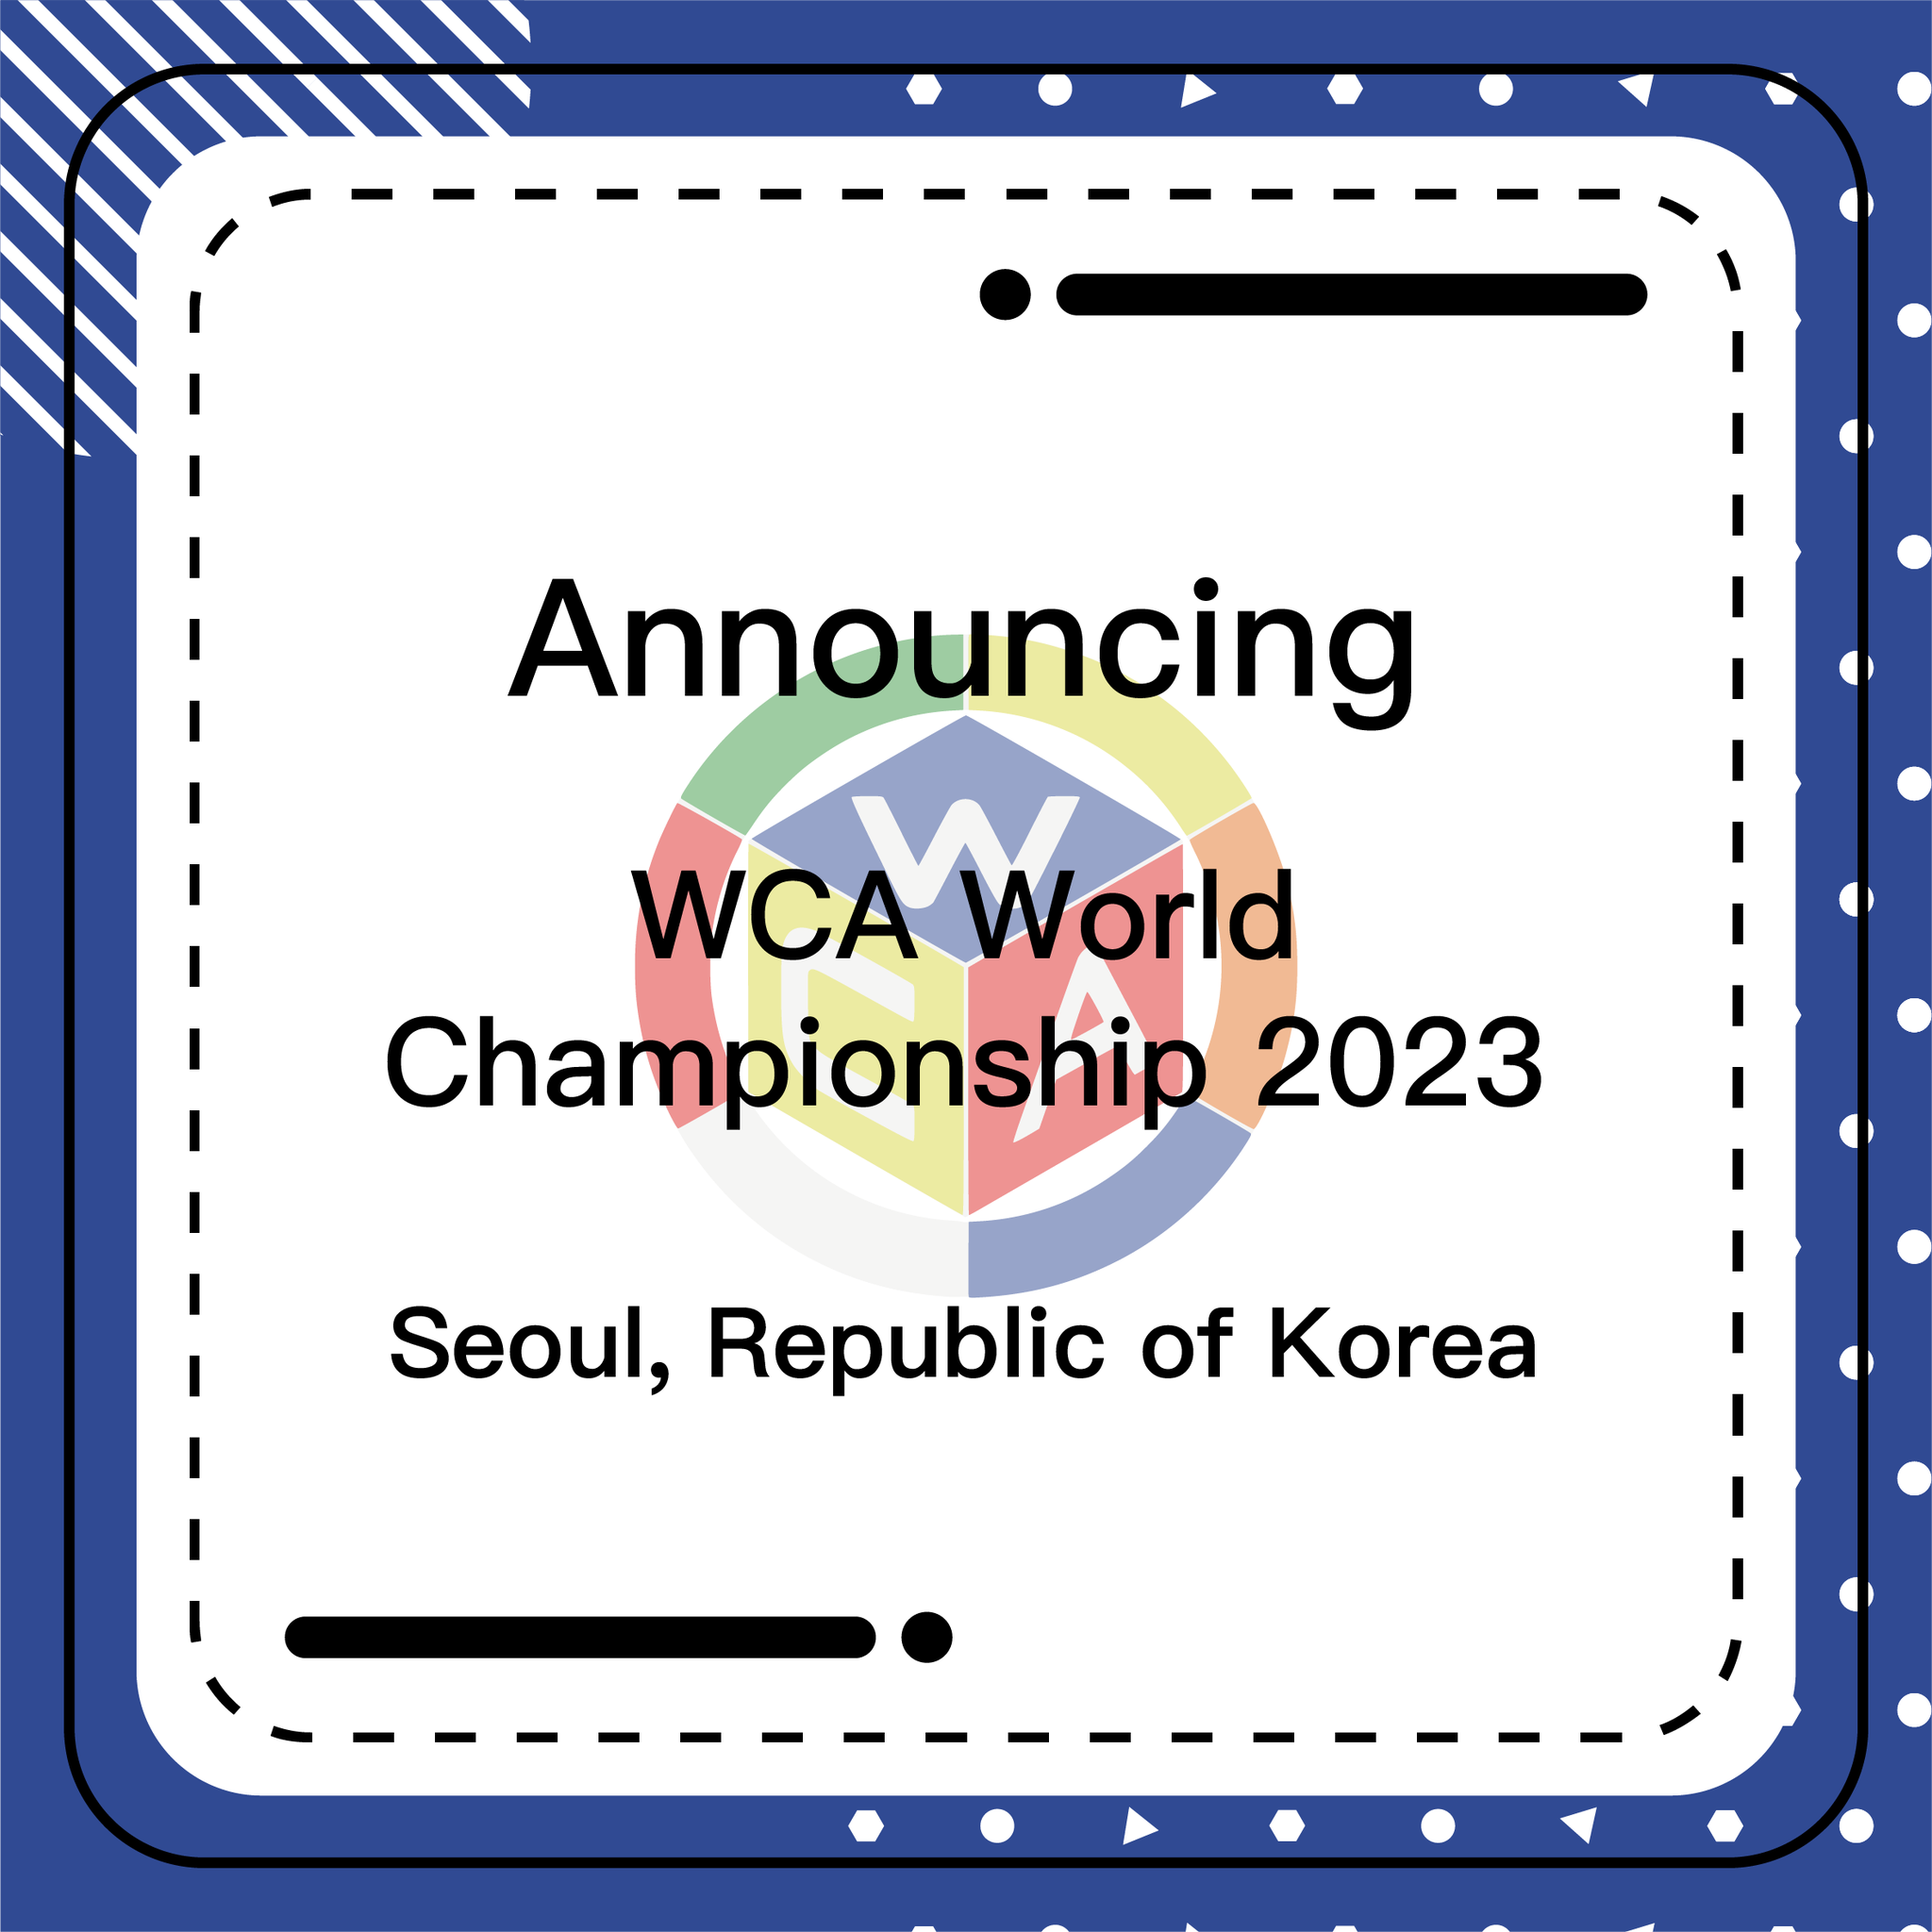 Rubik's WCA Oceanic Championship 2022